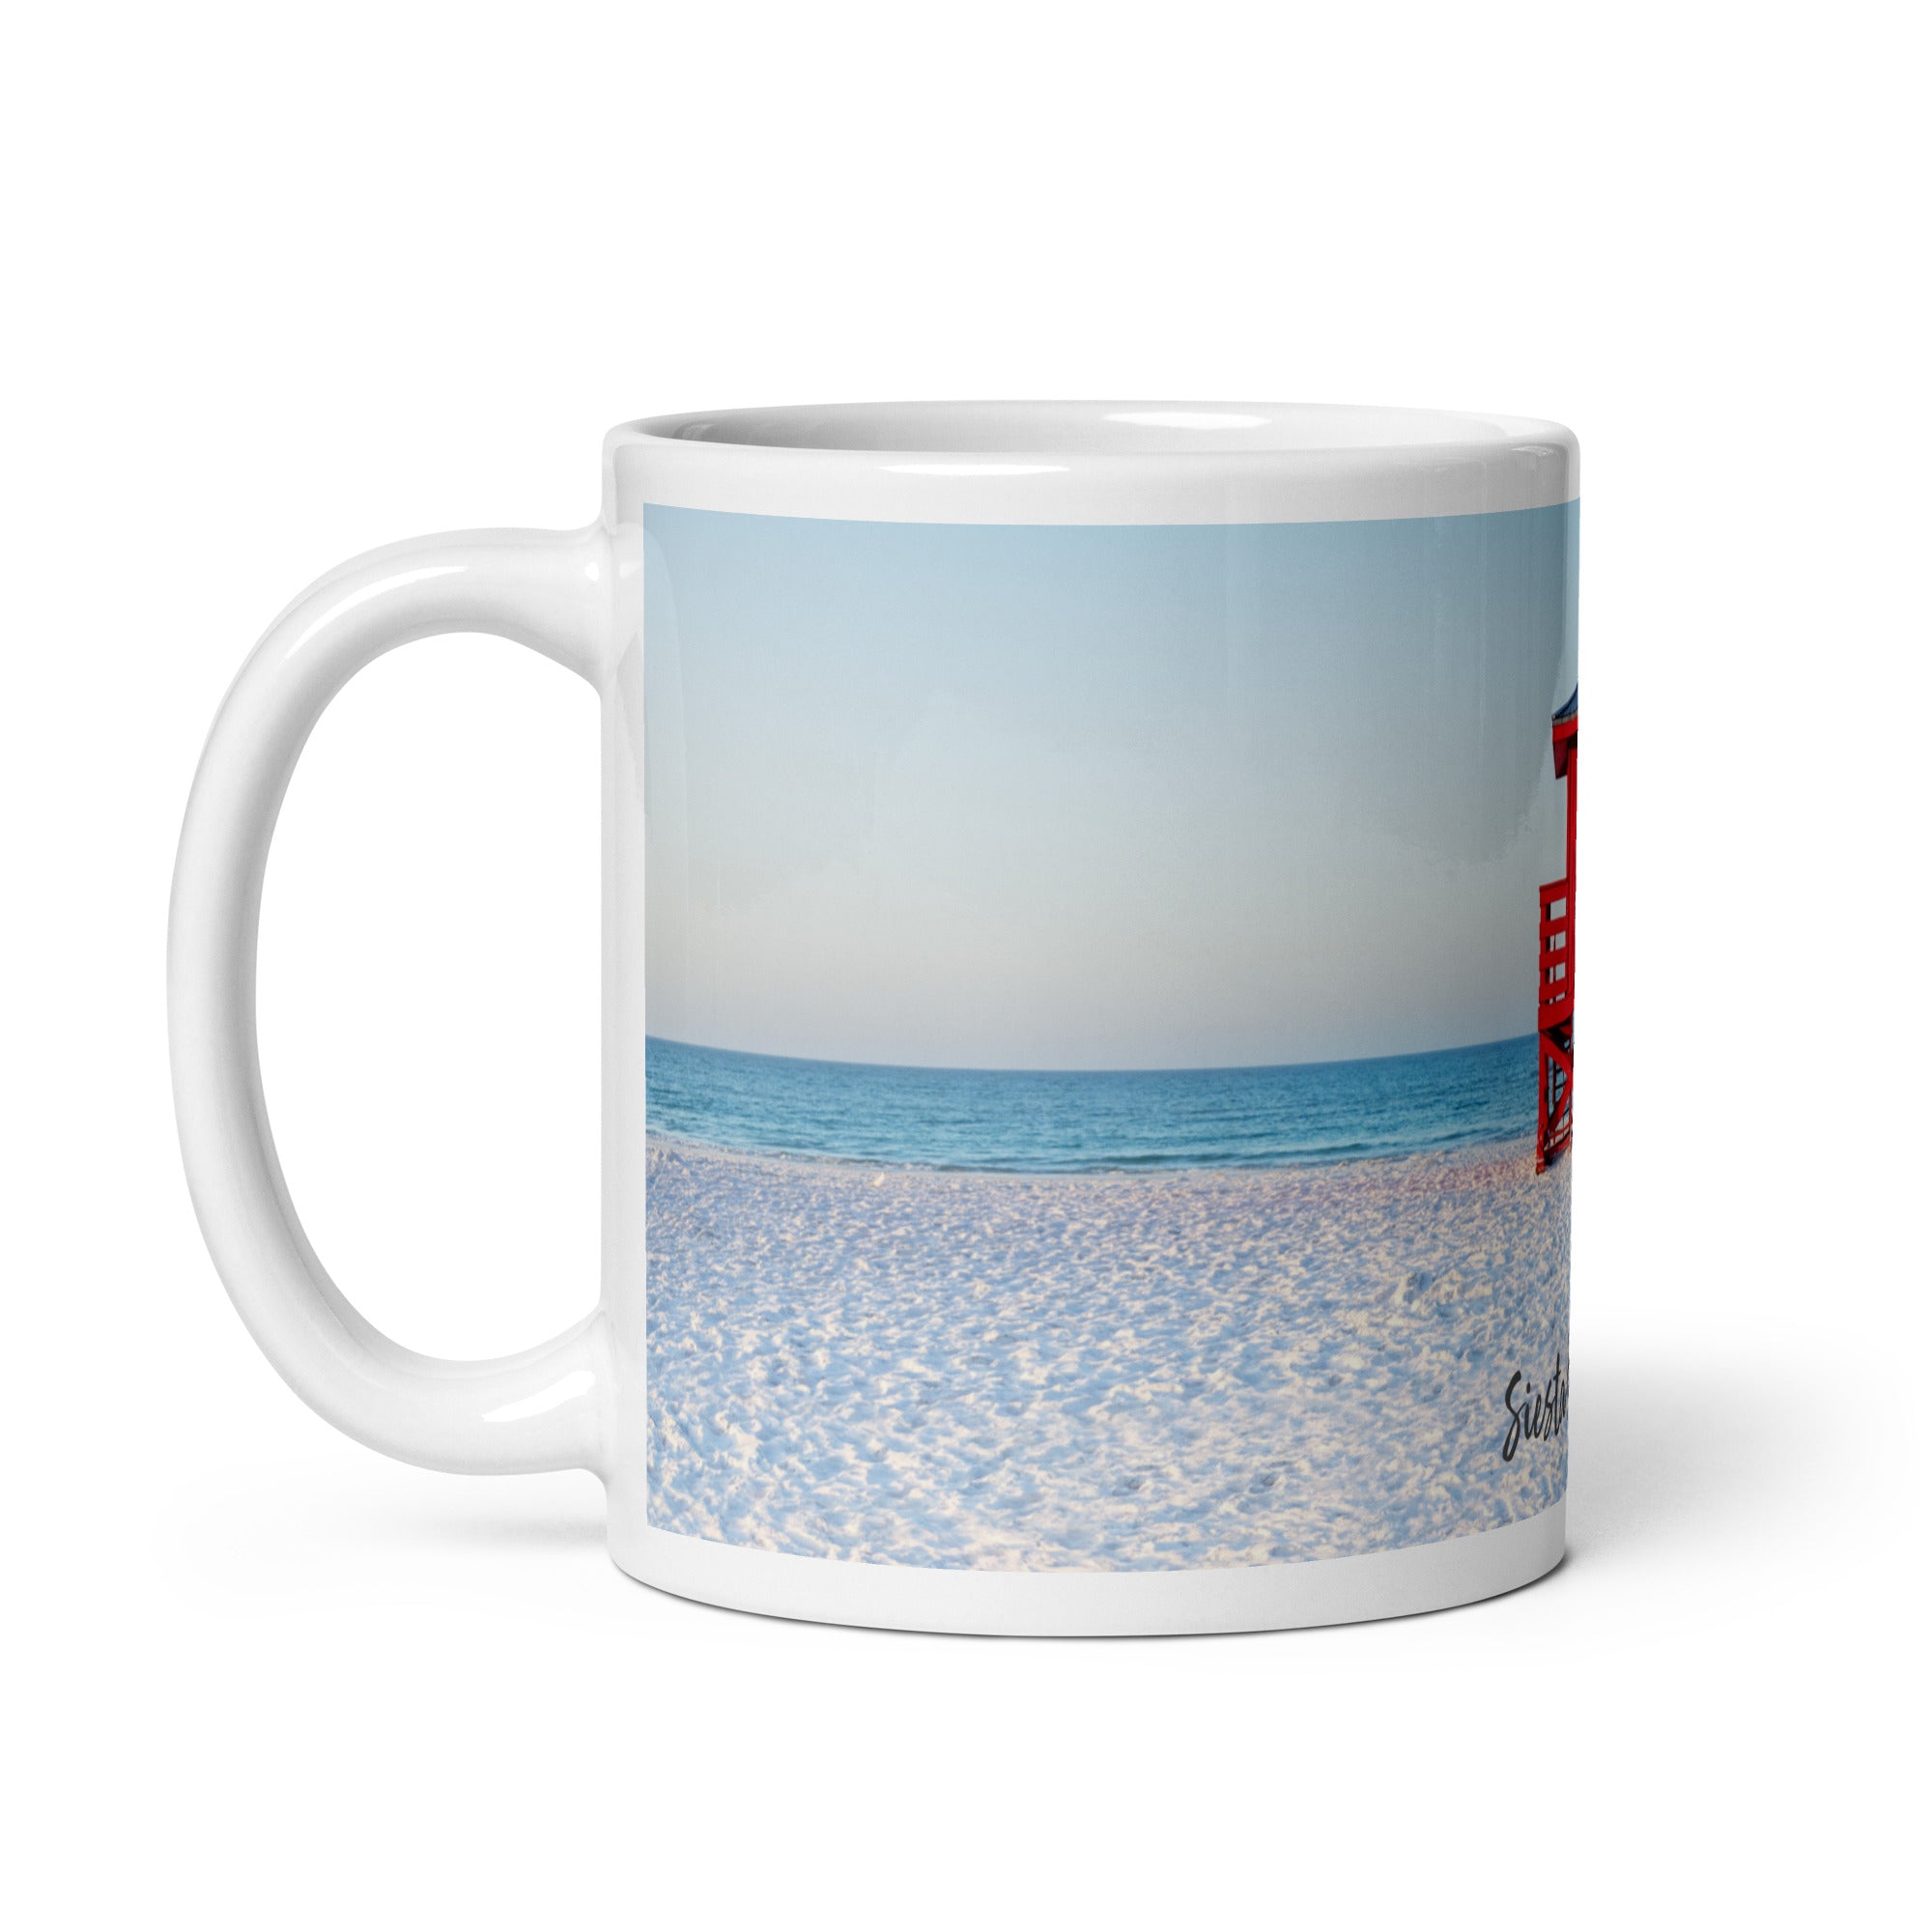 Red Lifeguard Stand Coffee Mug - Siesta Key Beach